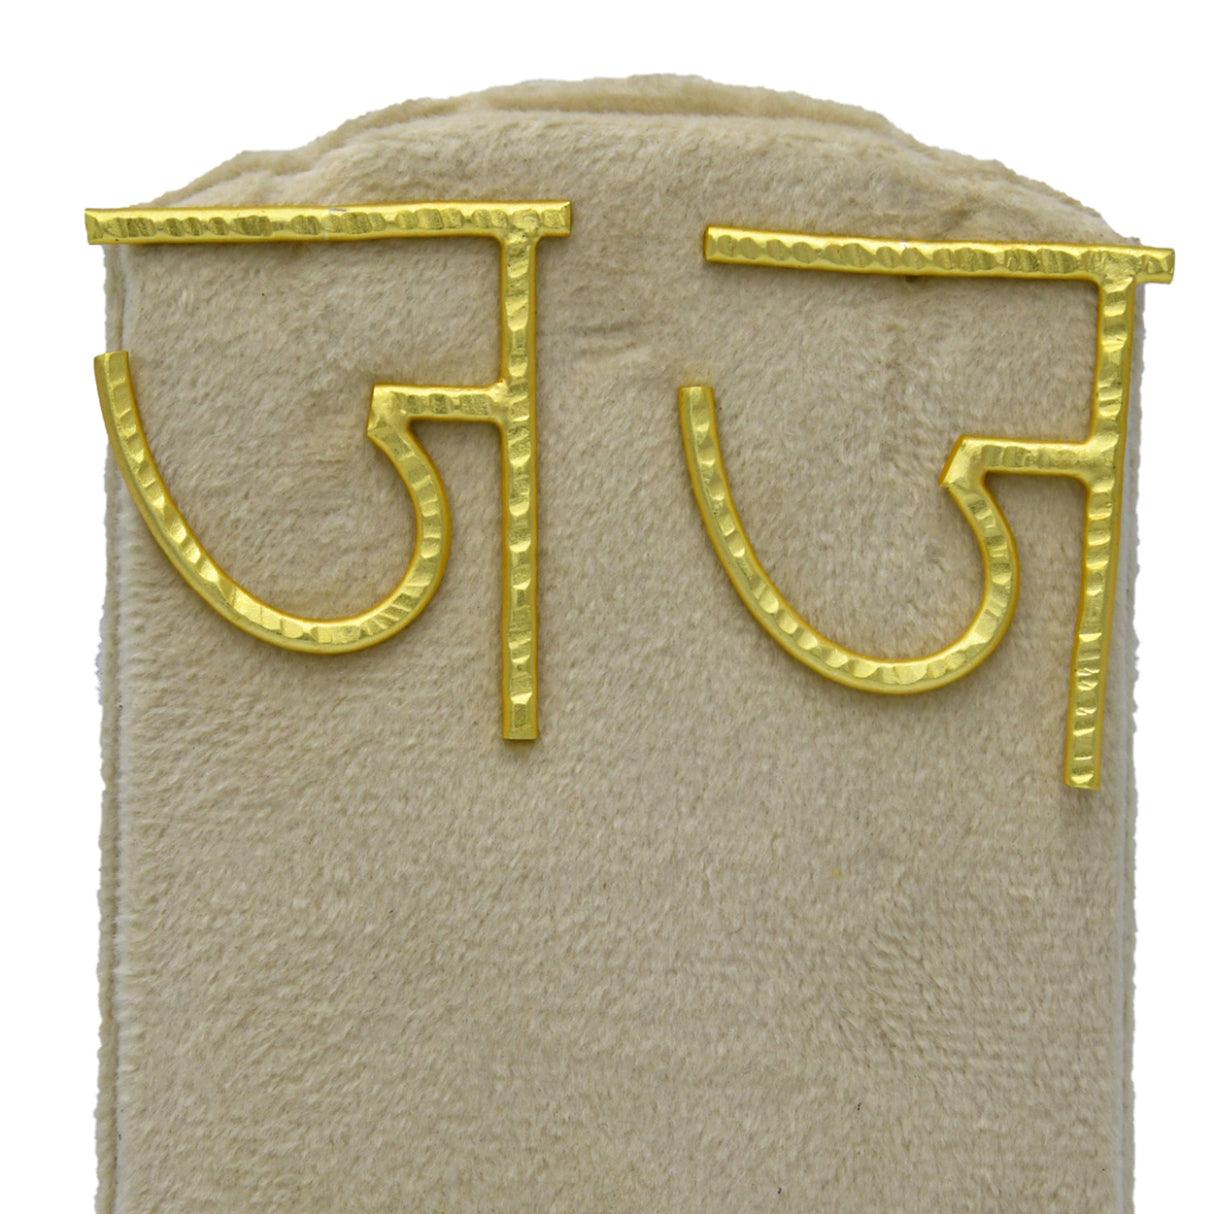 Hindi Alphabet "JA" Brass Earring - DeKulture DKW-1355-SEJ